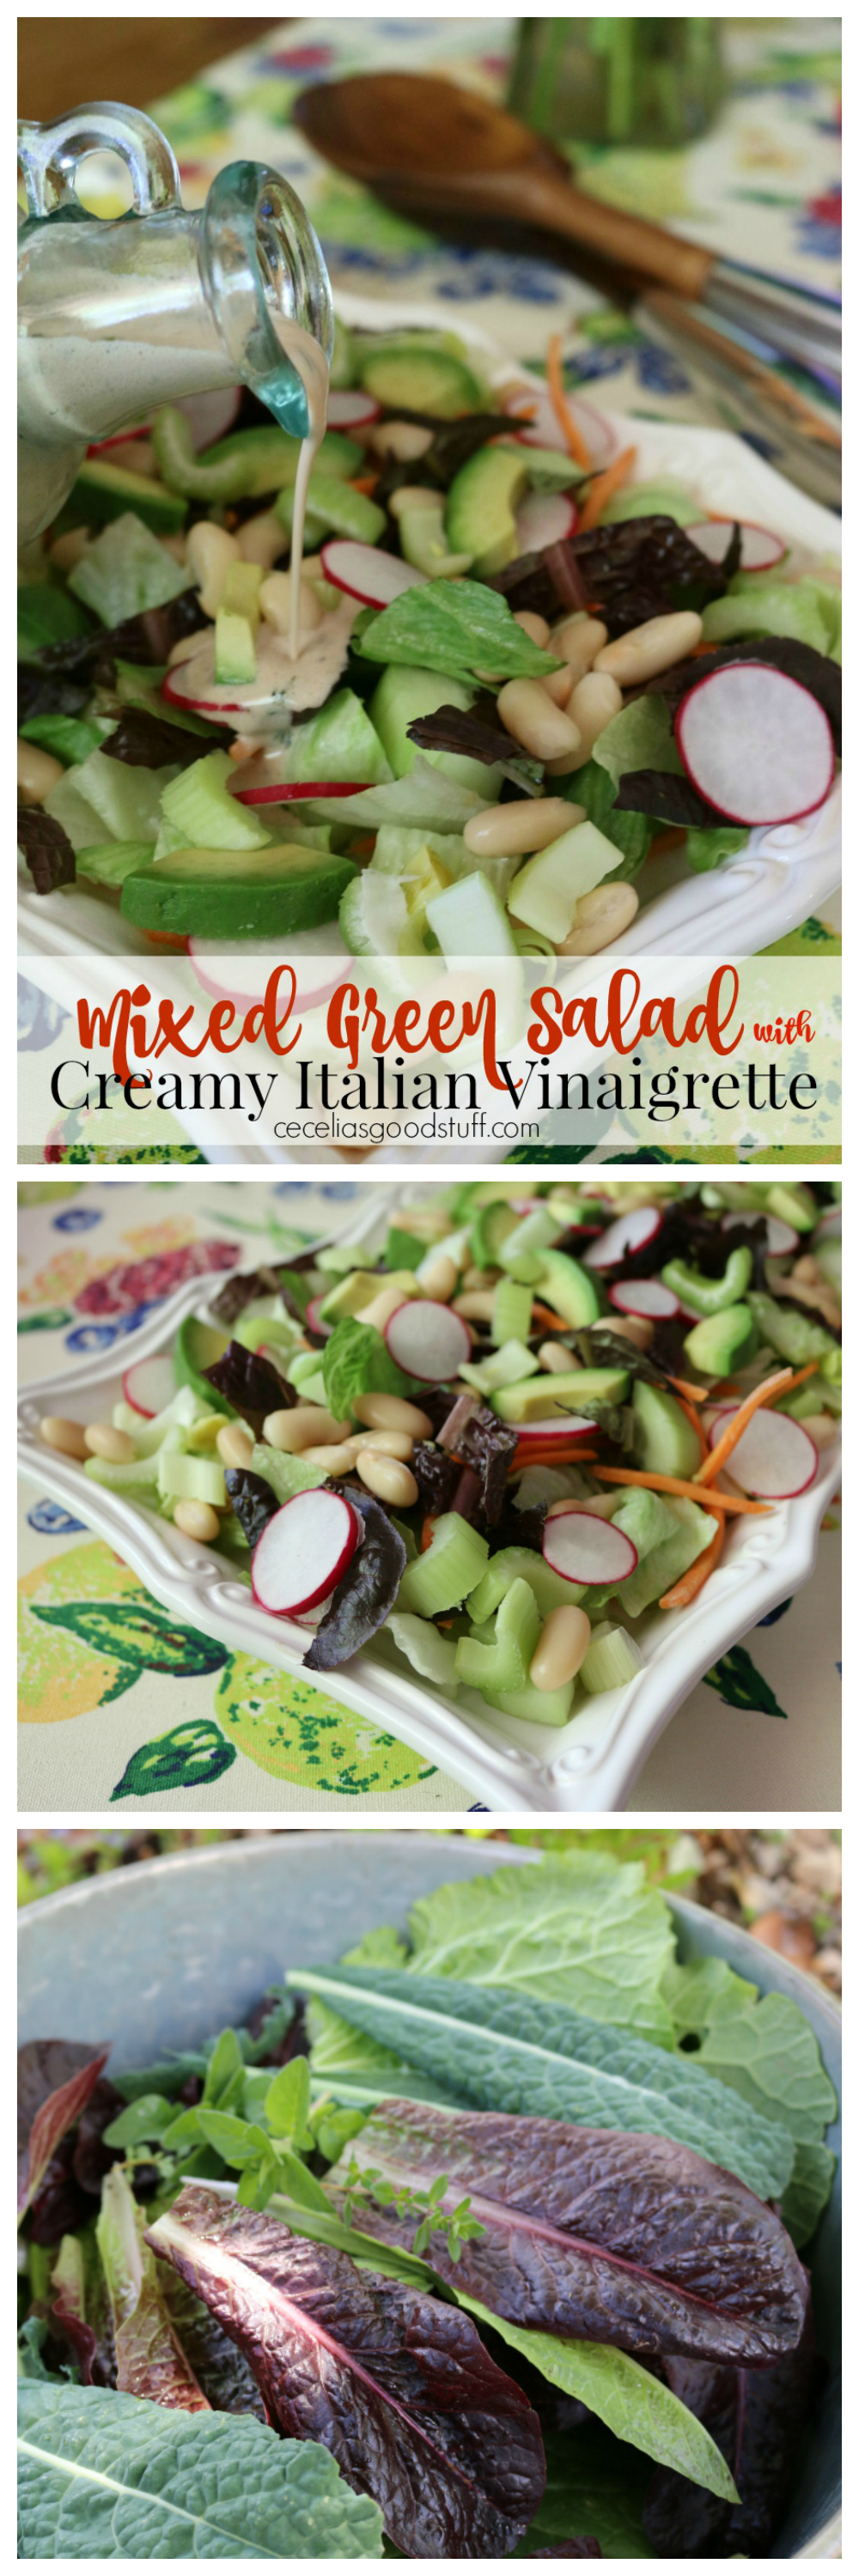 Mixed Green Summer Salad with Creamy Italian Vinaigrette CeceliasGoodStuff.com Good Food for Good People